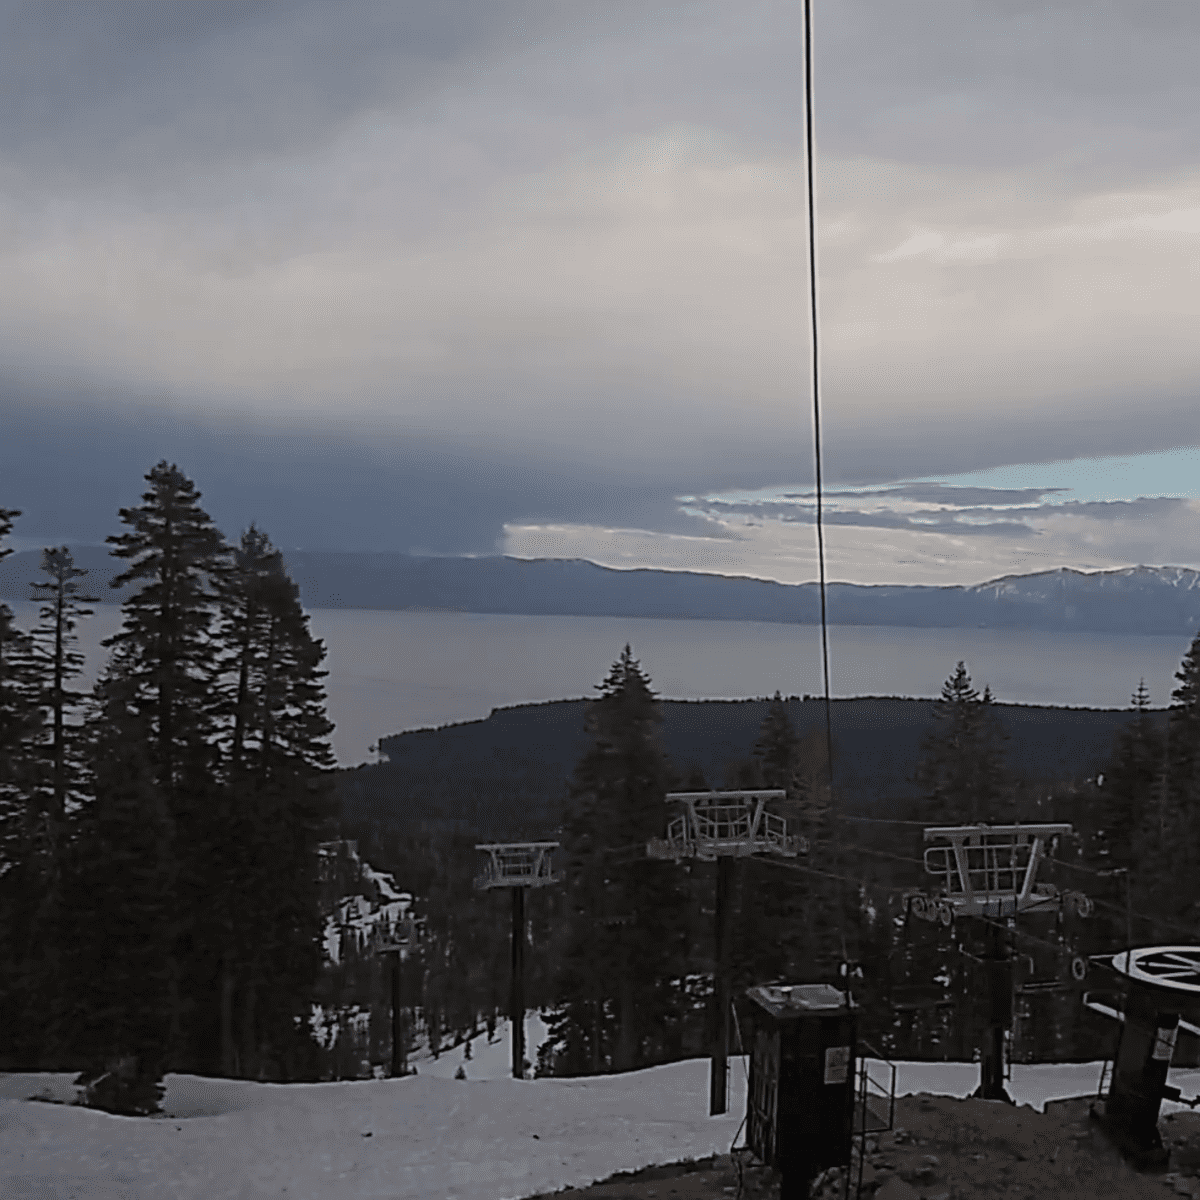 Nation's Largest Ski Resort Going Semi-Private - Powder